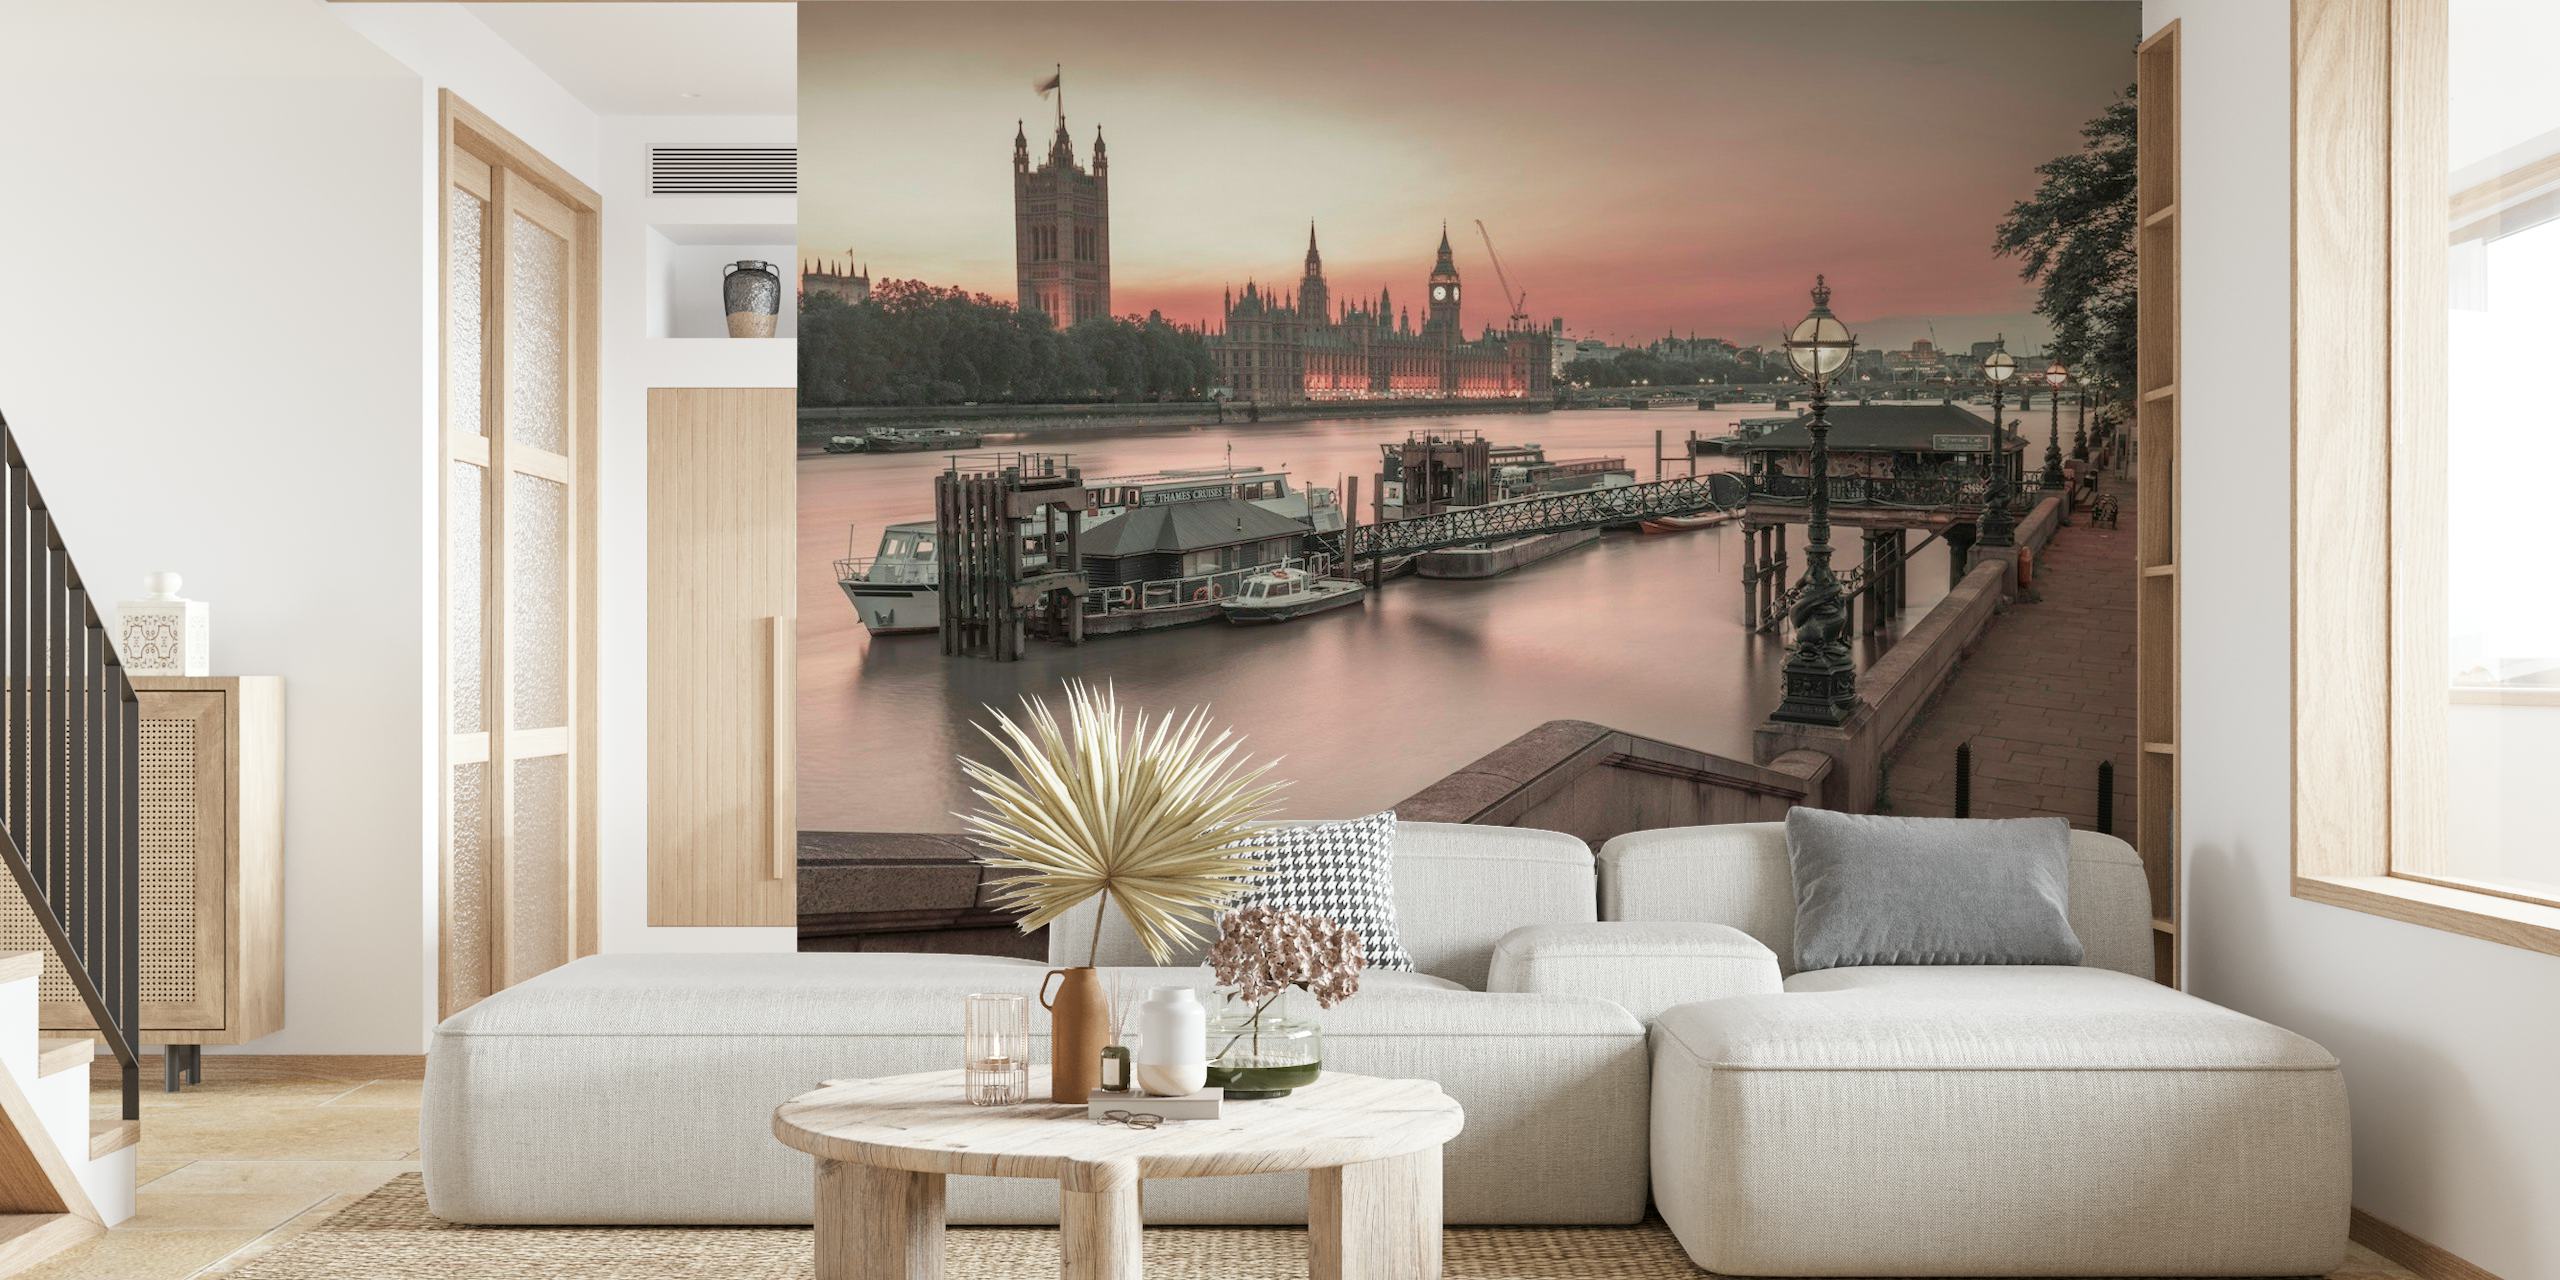 Londons skyline fototapet med Houses of Parliament och Big Ben i skymningen